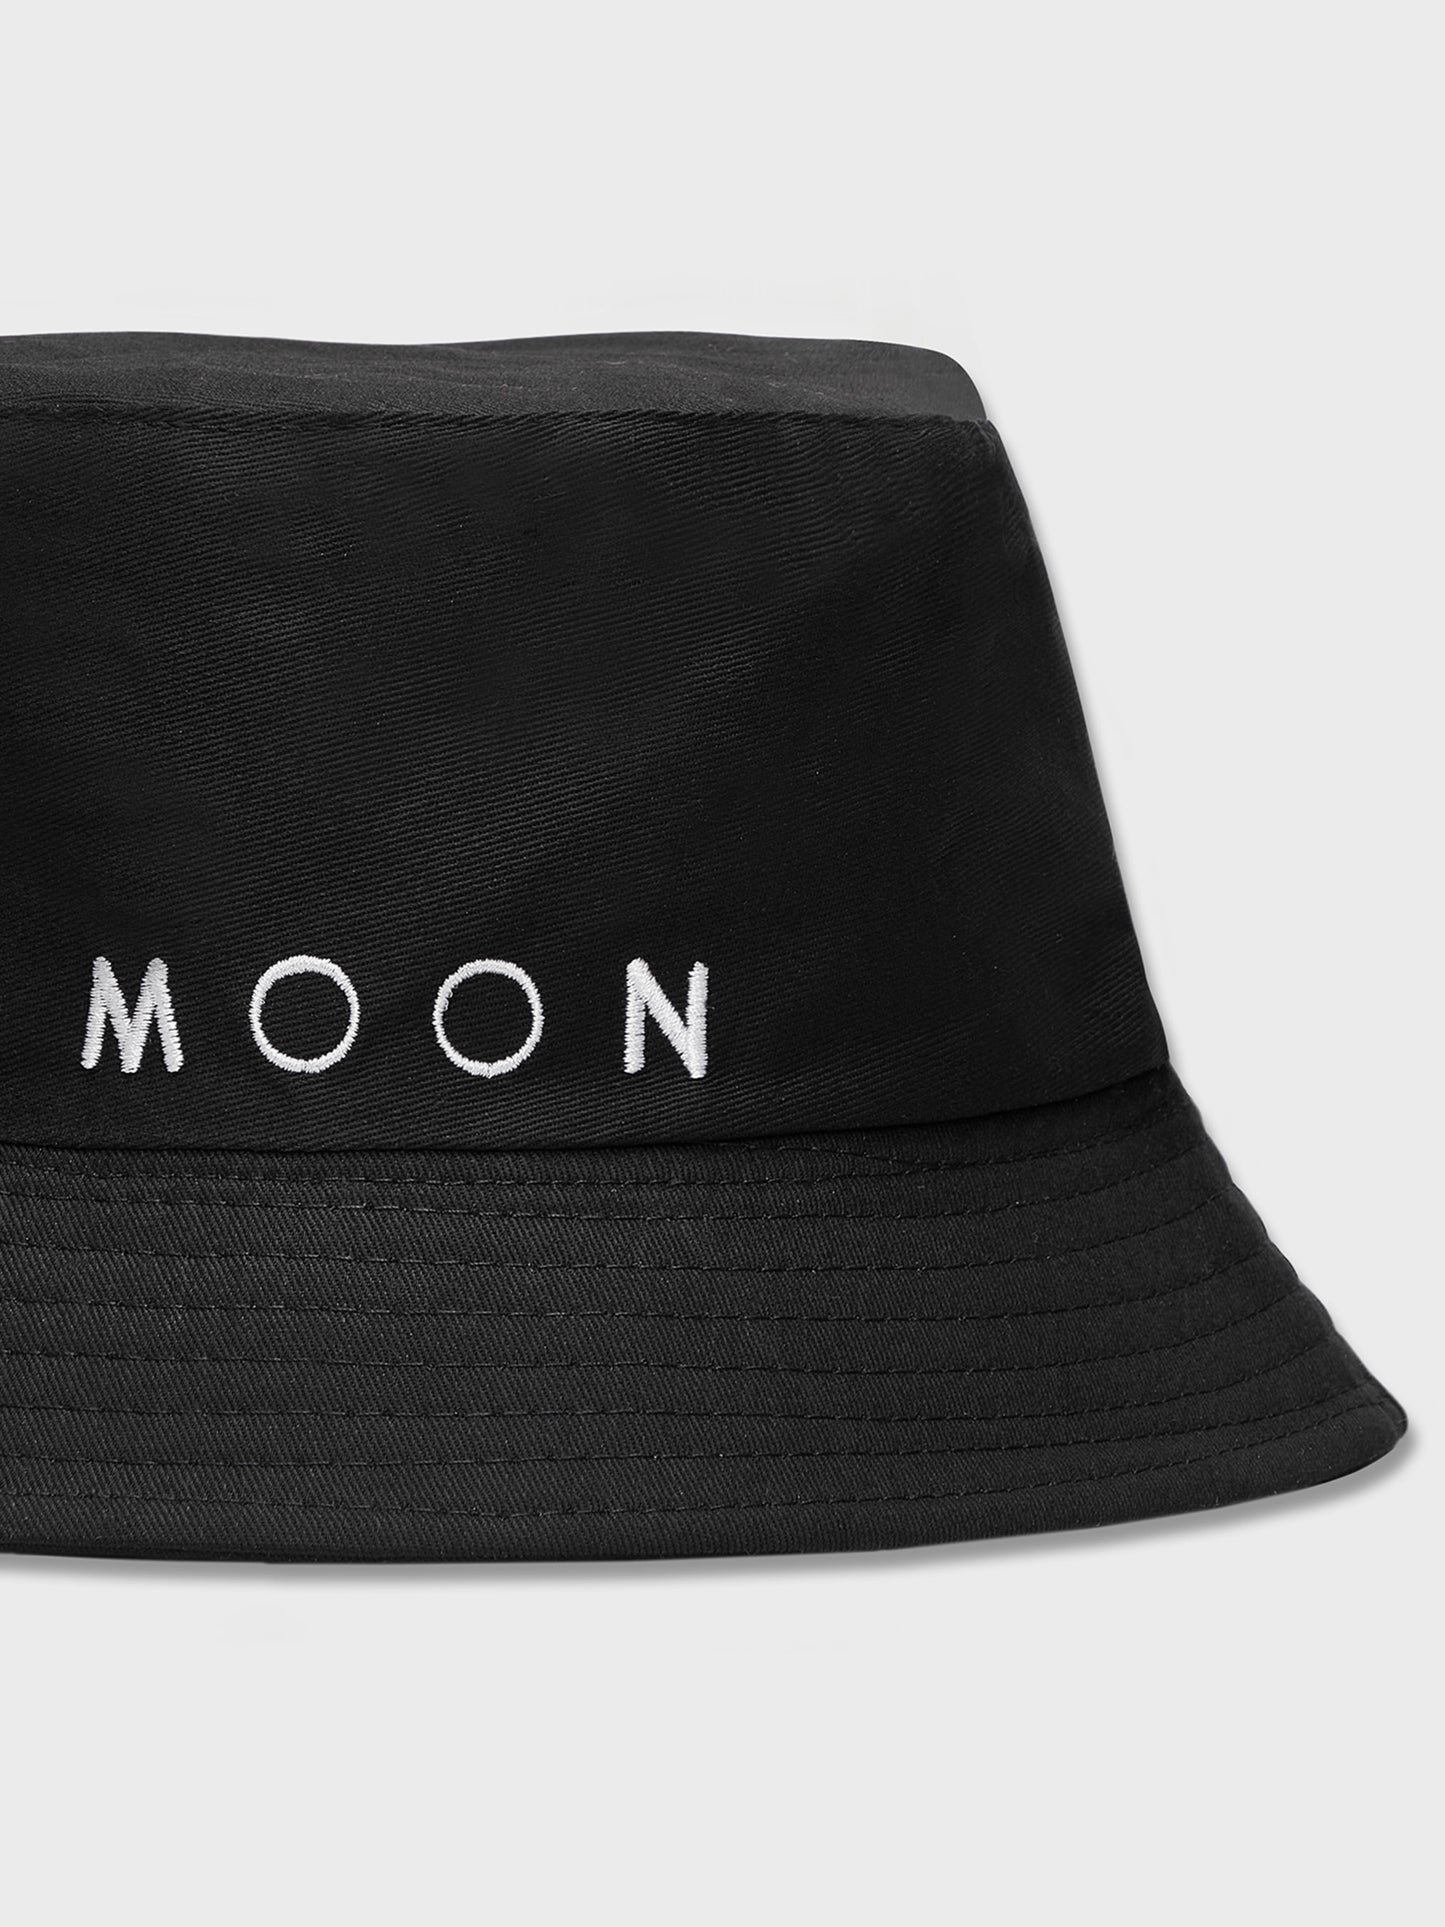 The MOON Bucket Hat